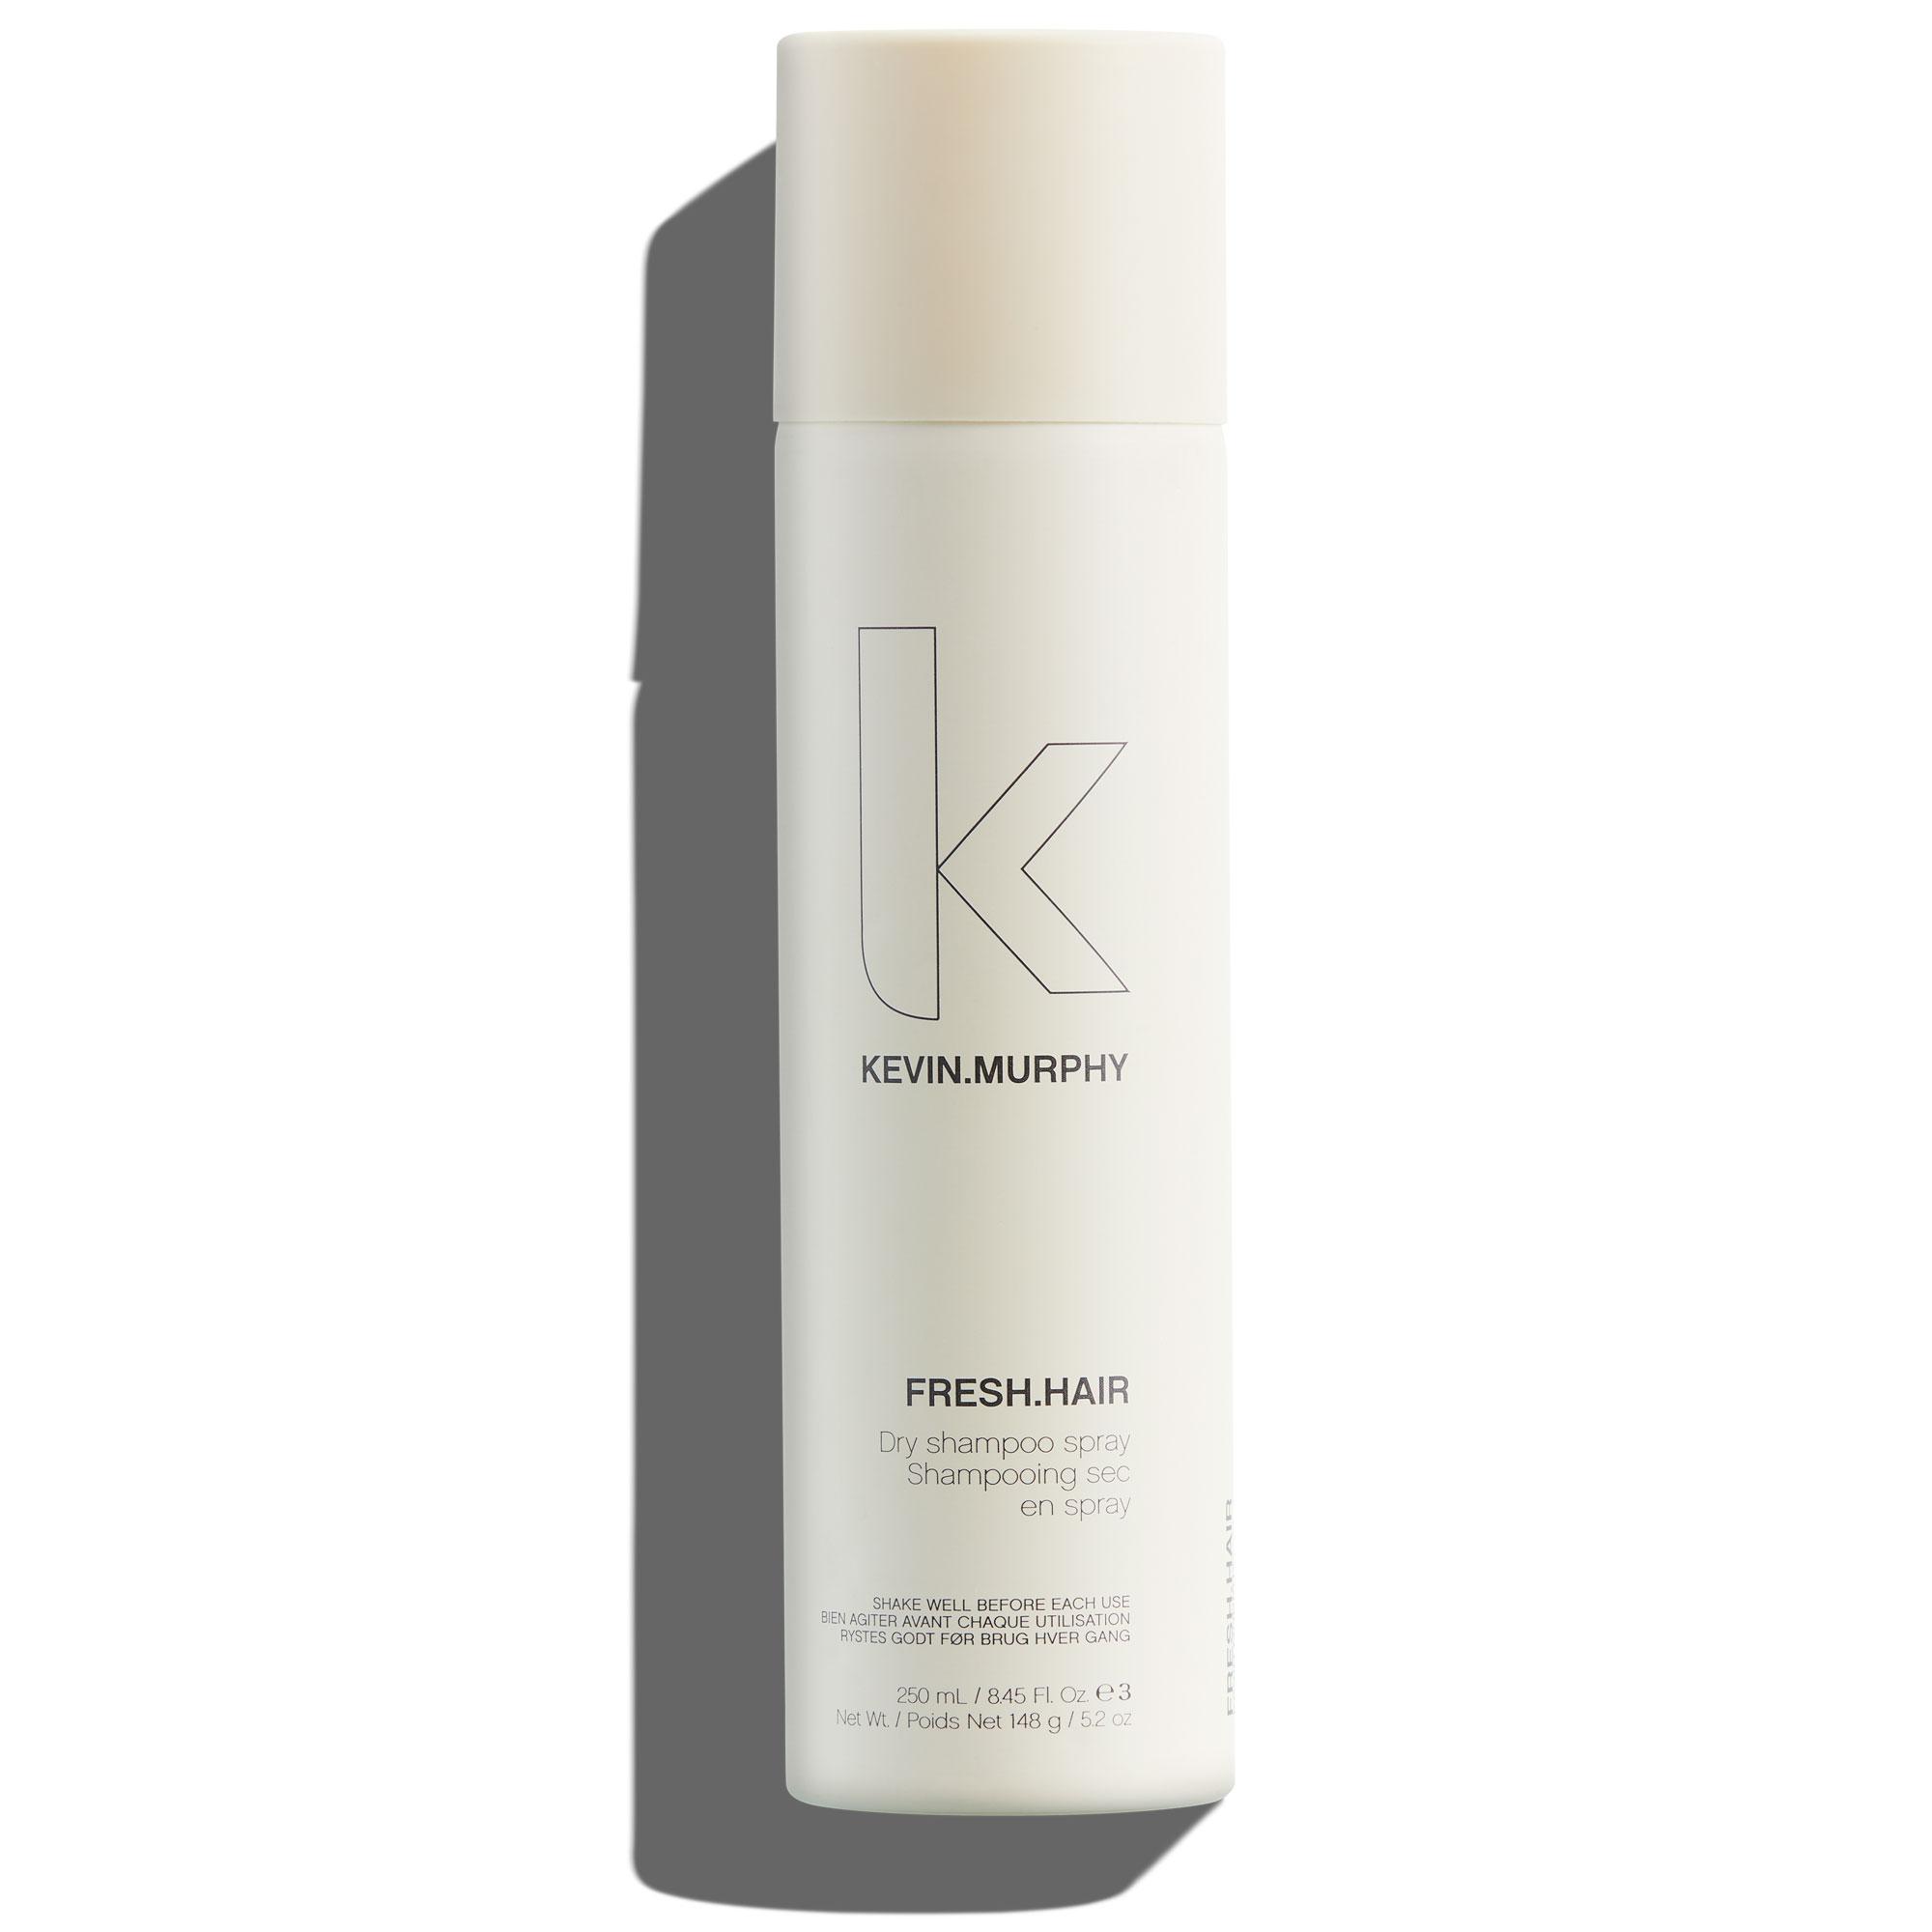 KEVIN.MURPHY FRESH.HAIR Dry Shampoo 3.4oz